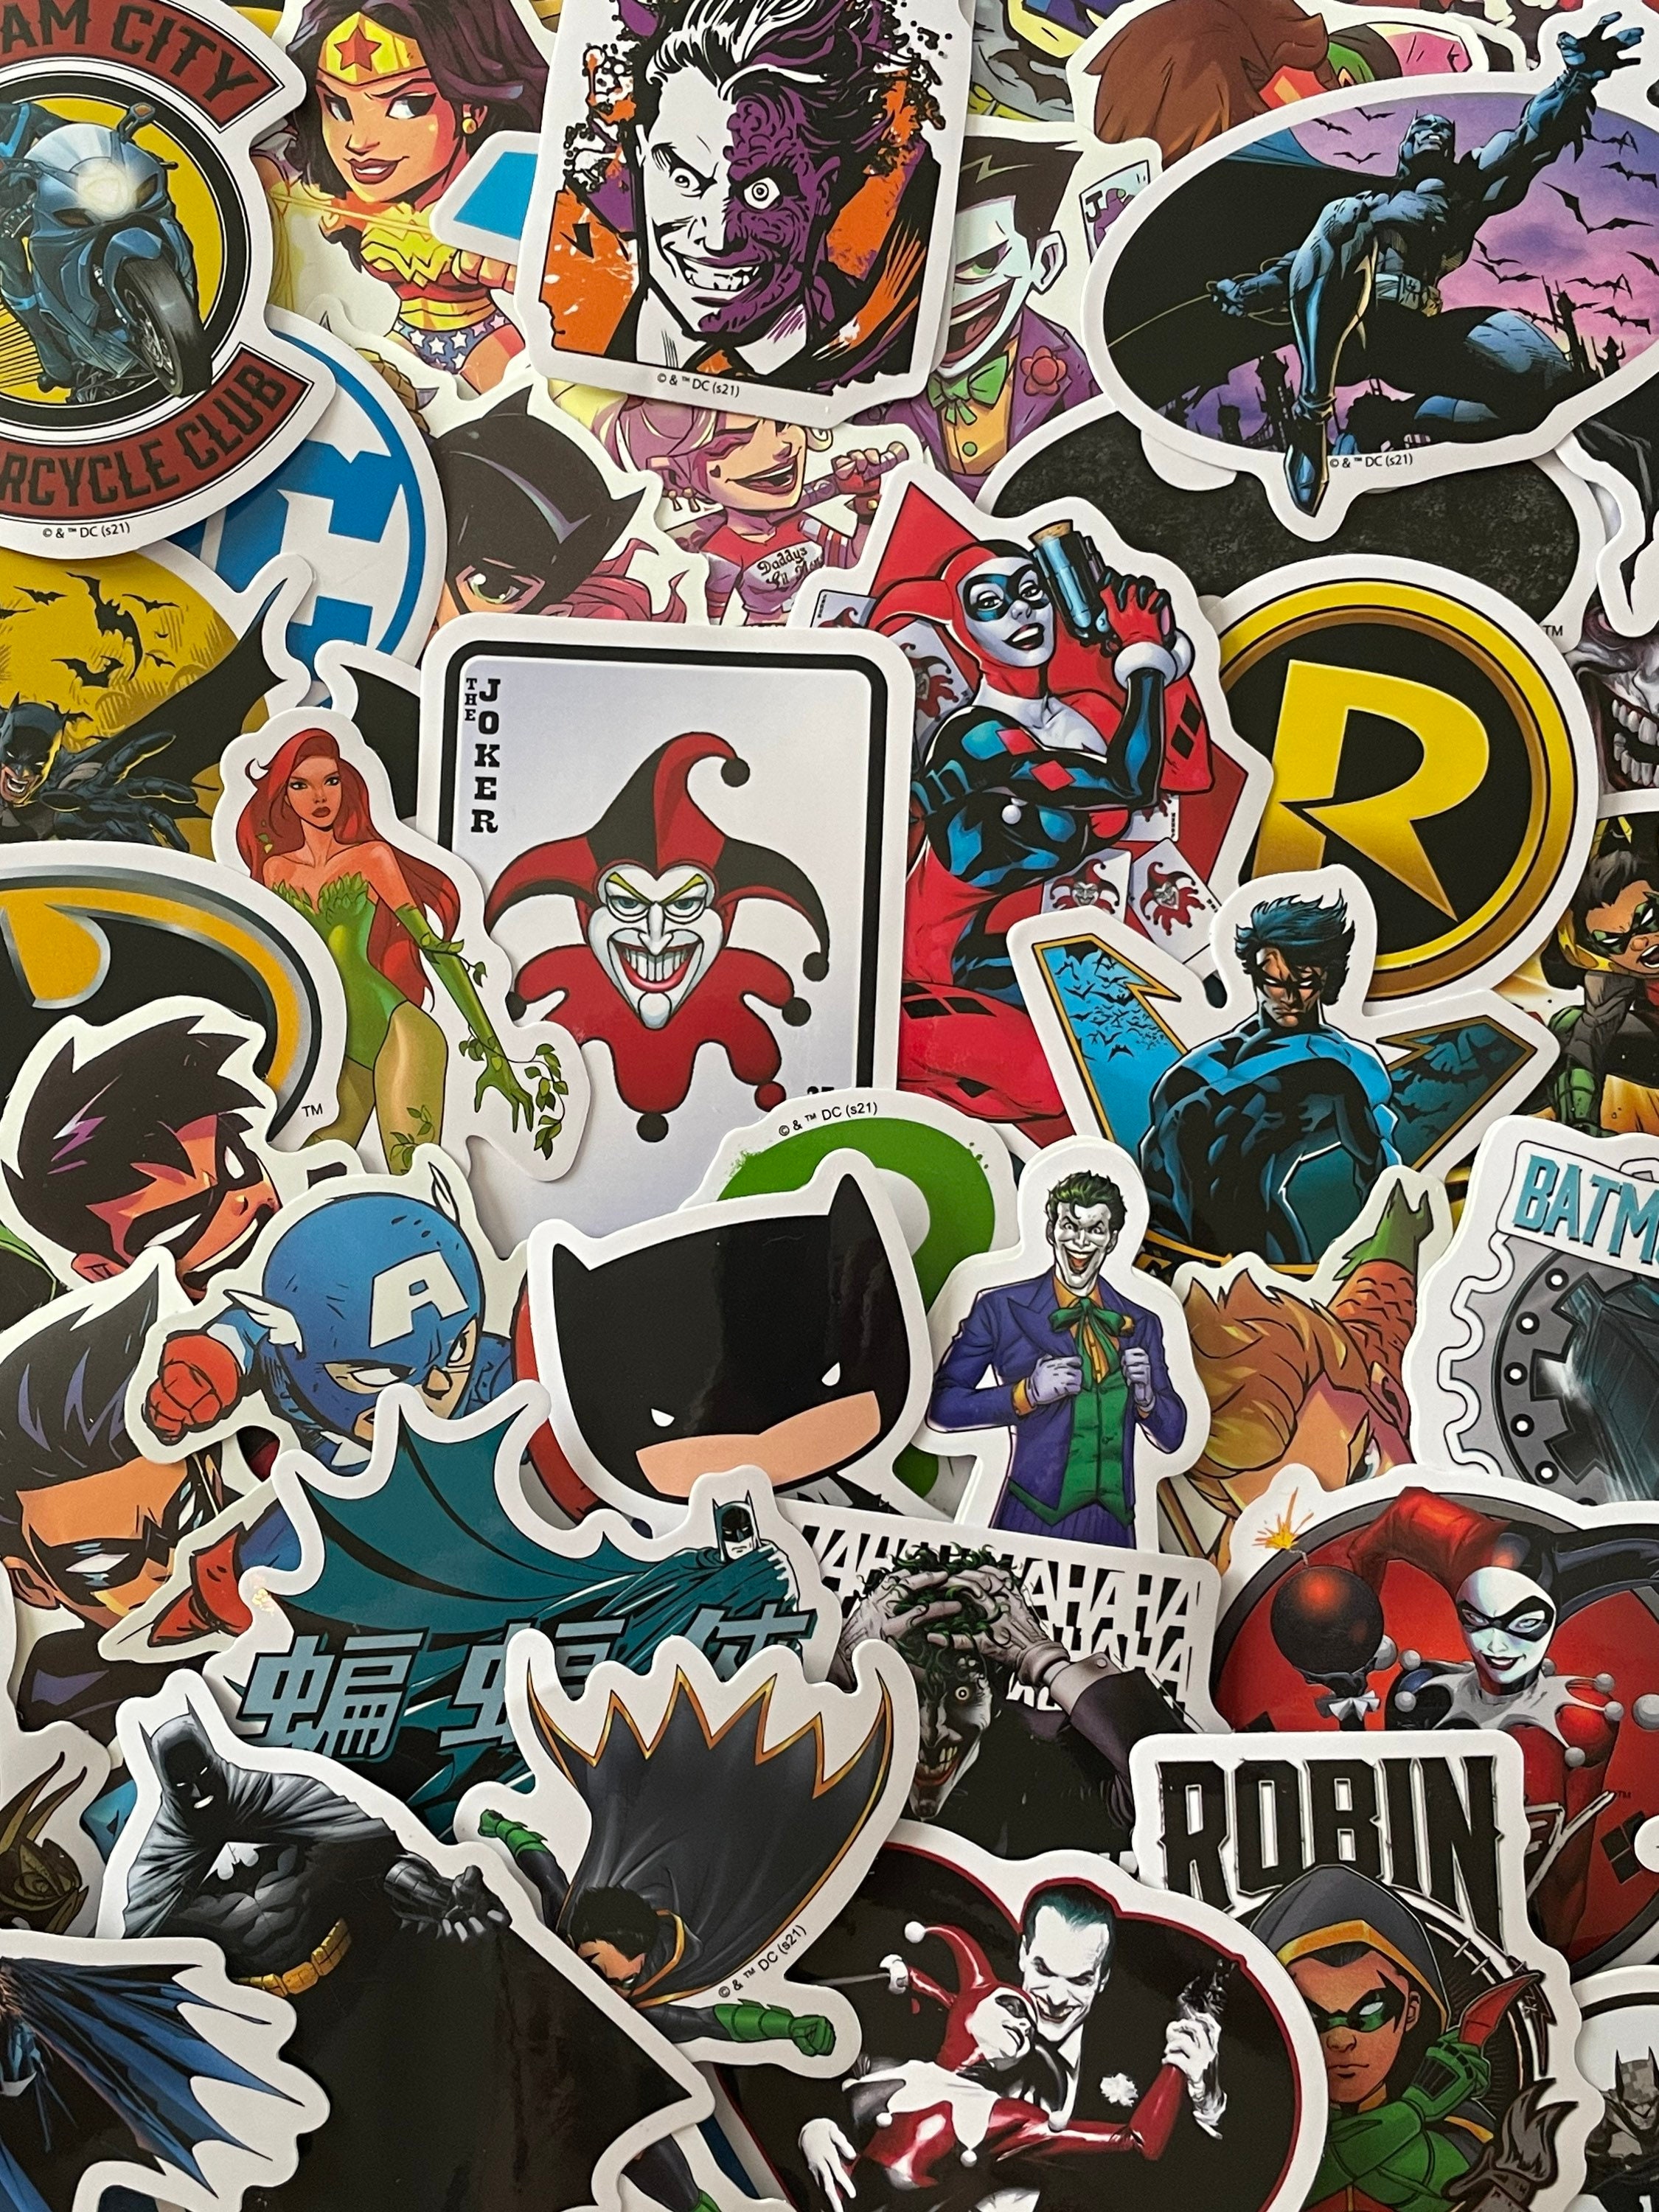 Custom DC Comics Stickers